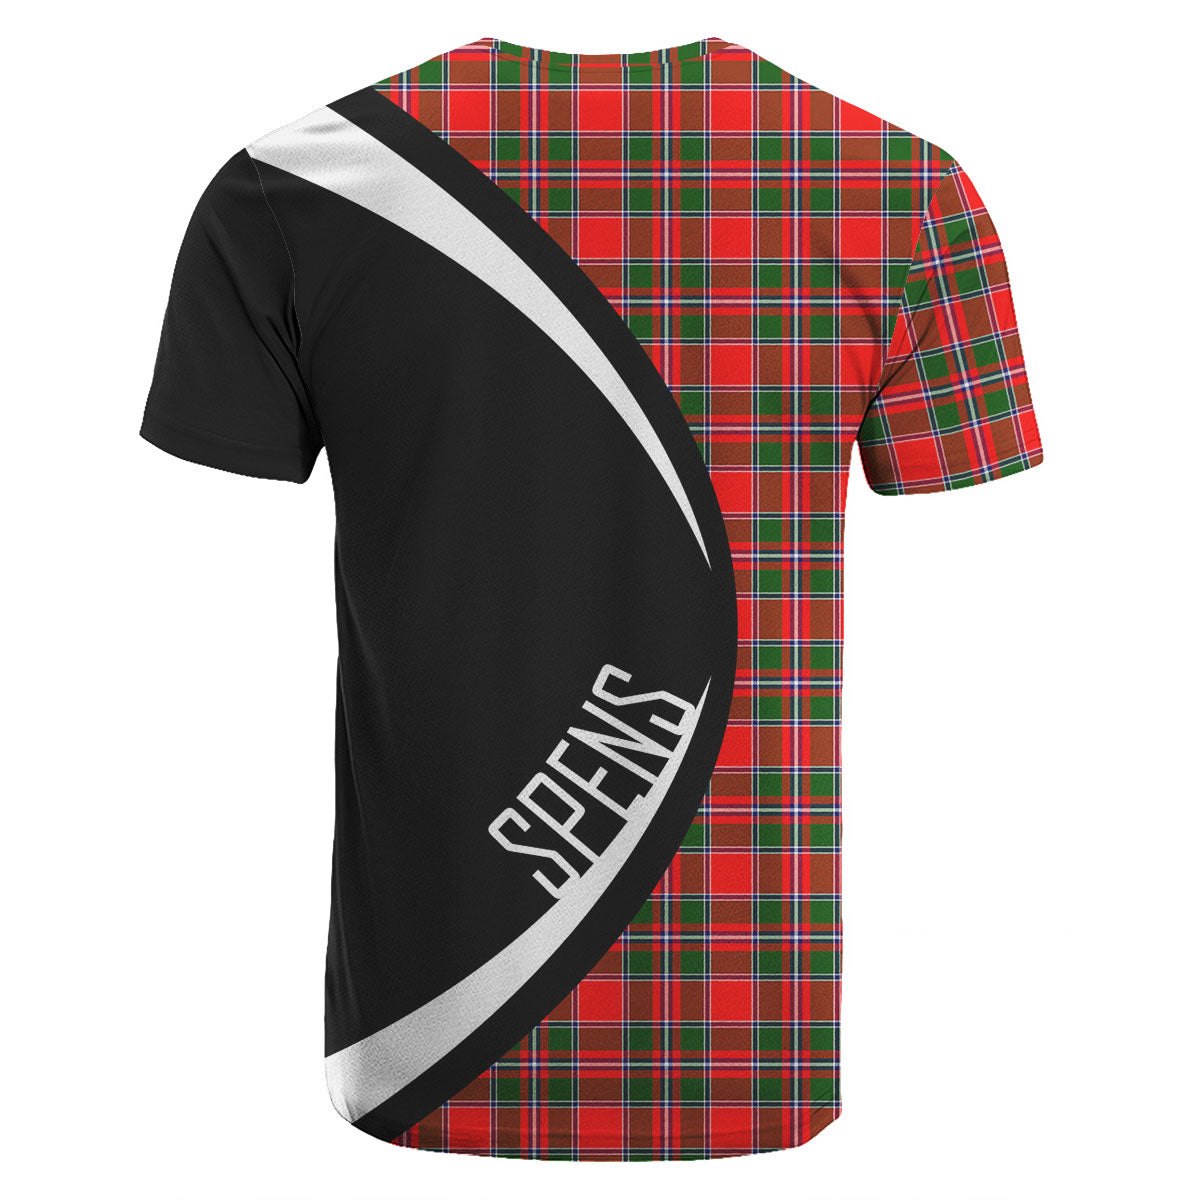 Spens (or Spence) Tartan Crest T-shirt - Circle Style